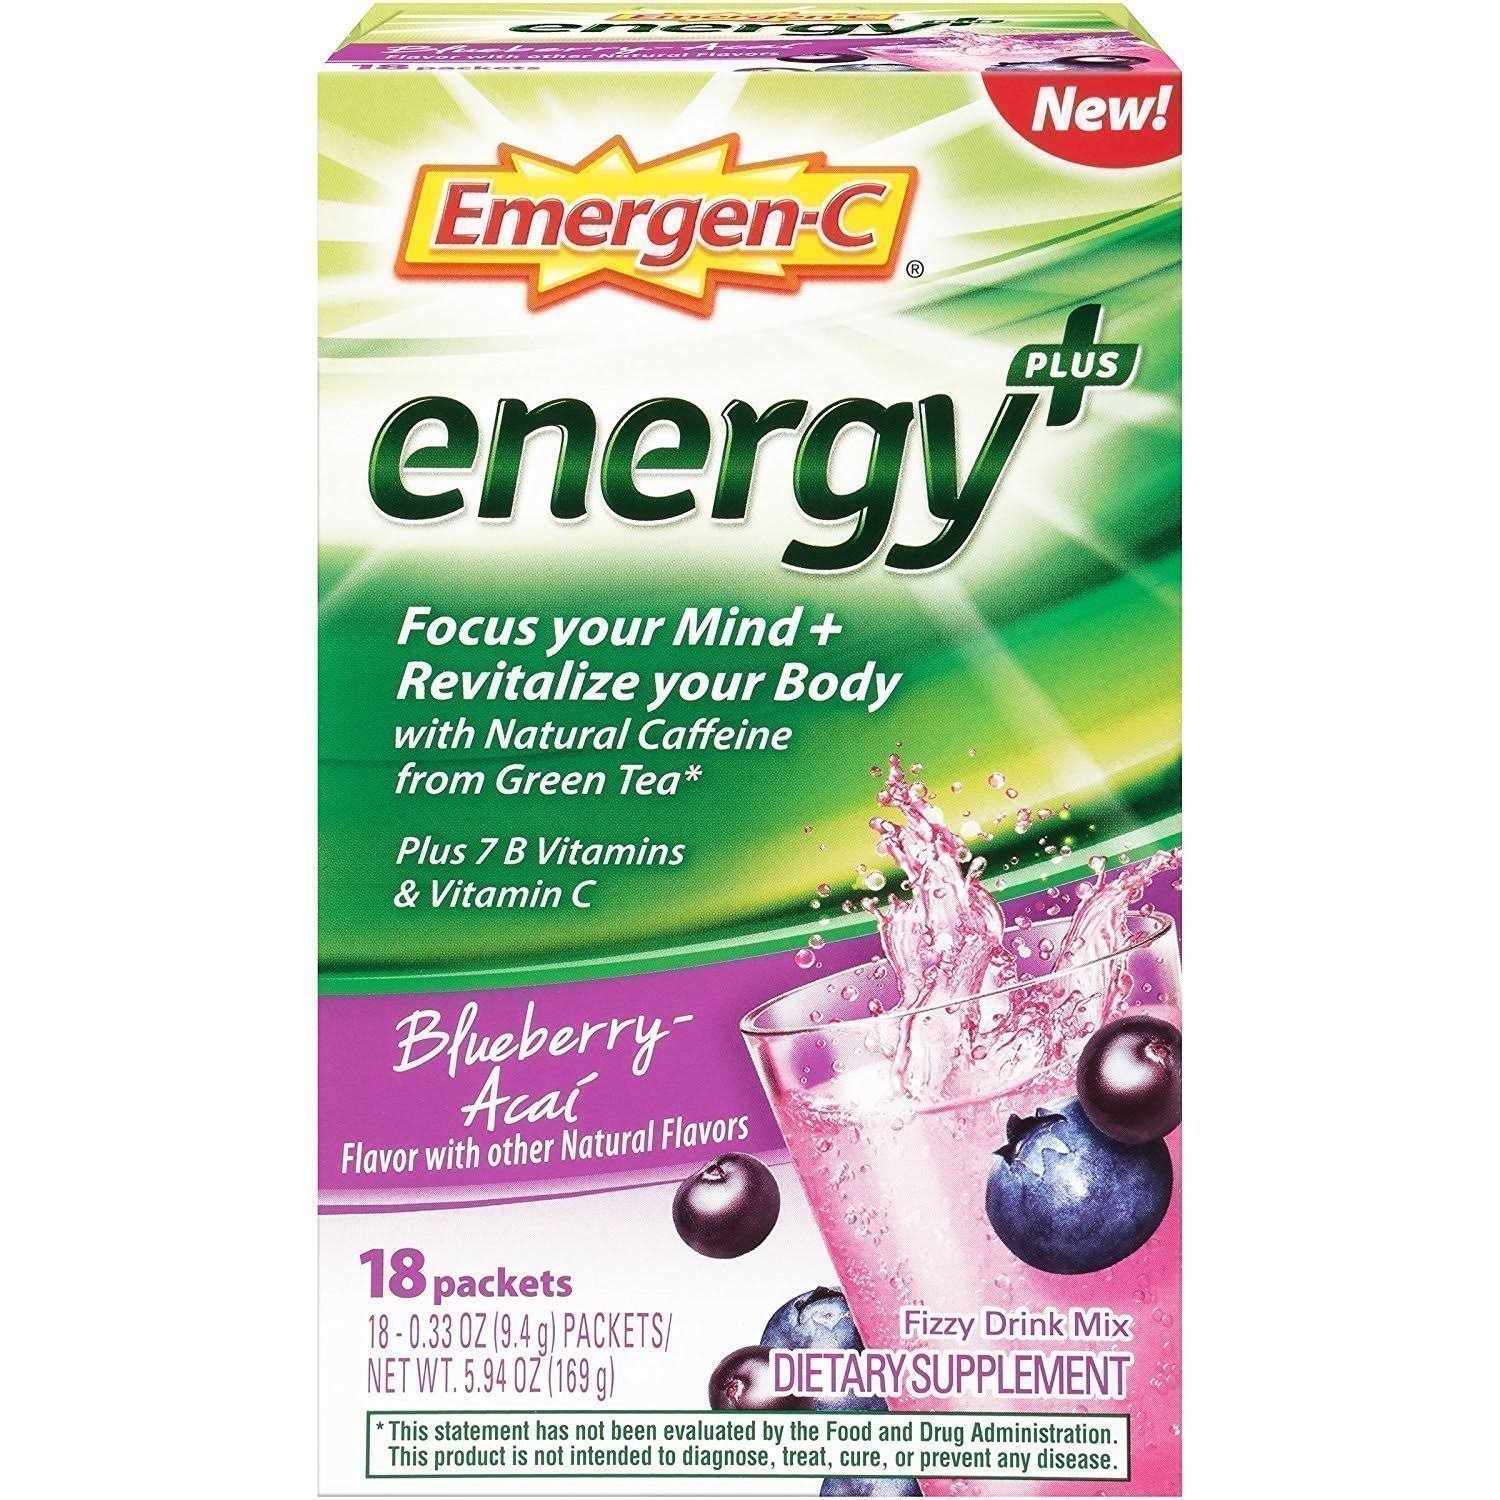 Emergen-C Energy Plus Dietary Supplement Drink Mix - Blueberry-Acai Flavor, 0.33oz, 18 Count